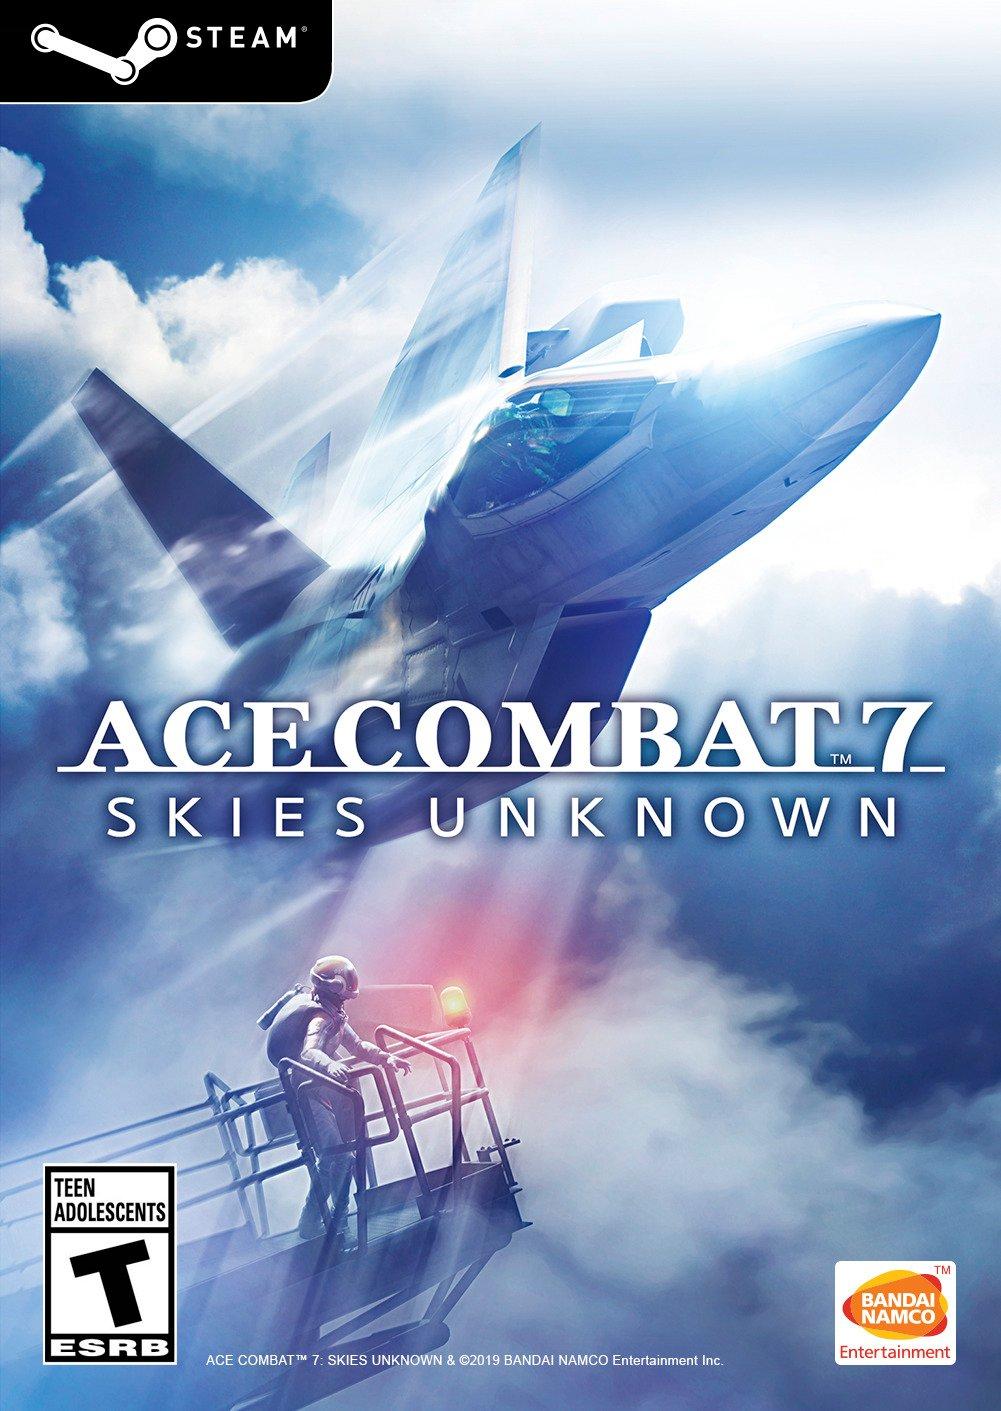 ace combat 7 vr free flight